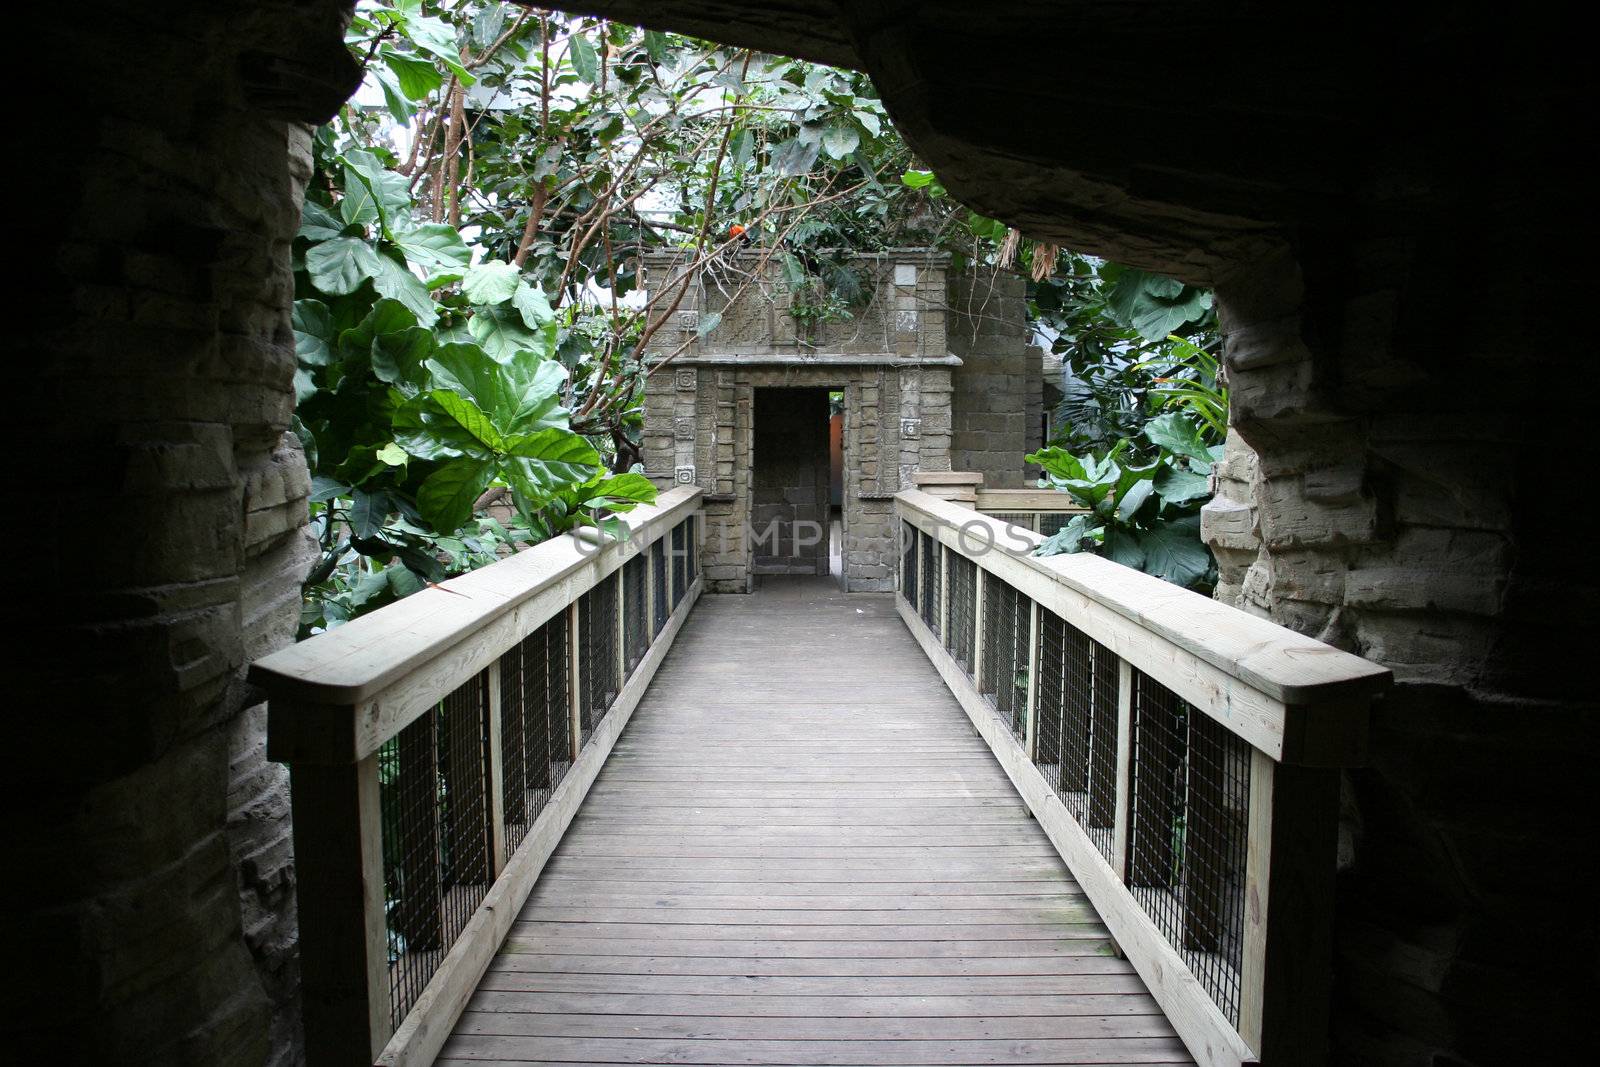 A bridge in a zoo that brings you through an attraction.